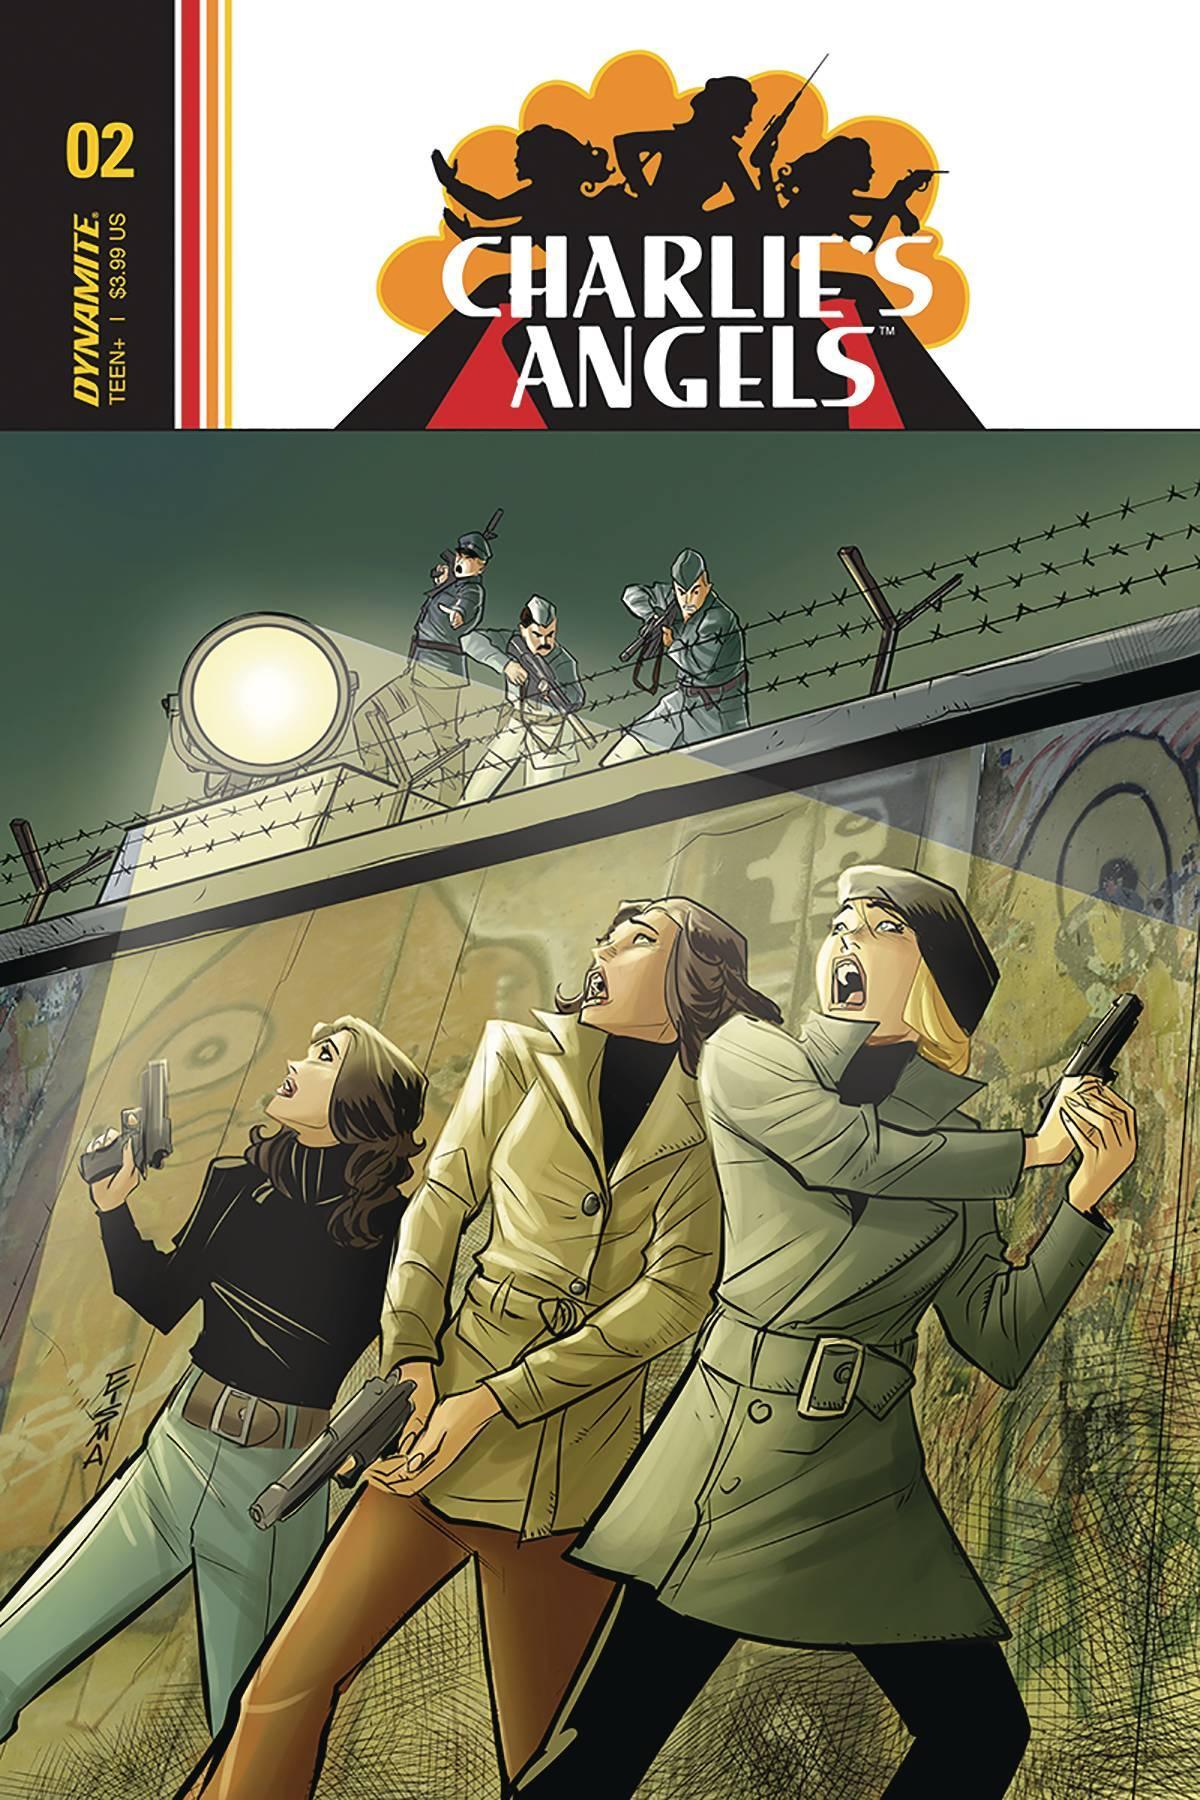 CHARLIES ANGELS #3 CVR B EISMA - Kings Comics